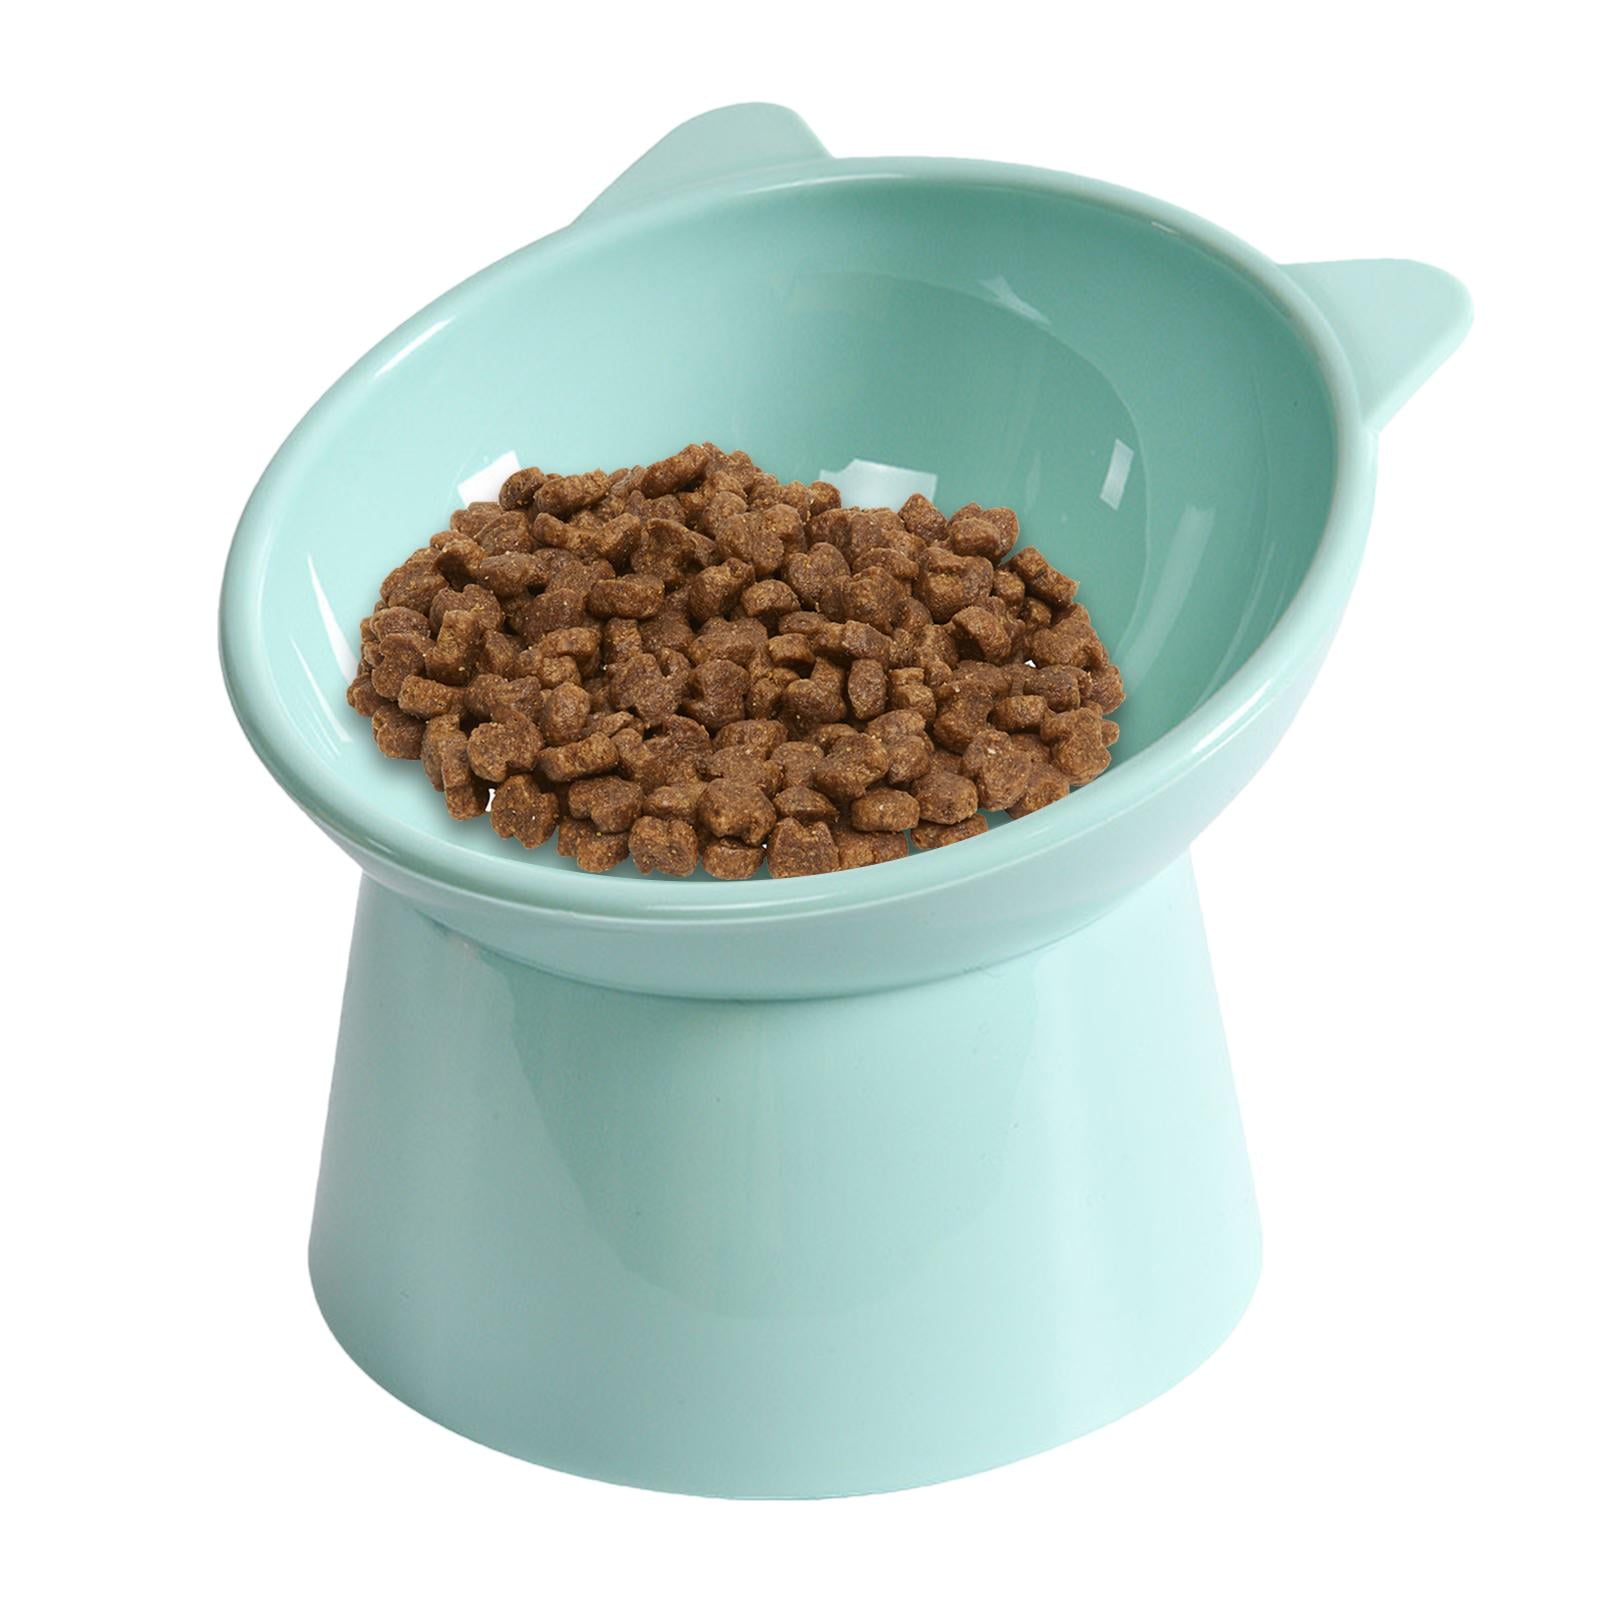  Ergonomic Cat Bowl, Cat Anti Vomit Food Bowl, Ergonomic Cat  Food Bowl, Cat Bowls Elevated Tilted, Elevated Cat Bowls, Anti-Fall Neck  Protection Cat Food Bowl (1*Blue) : Pet Supplies